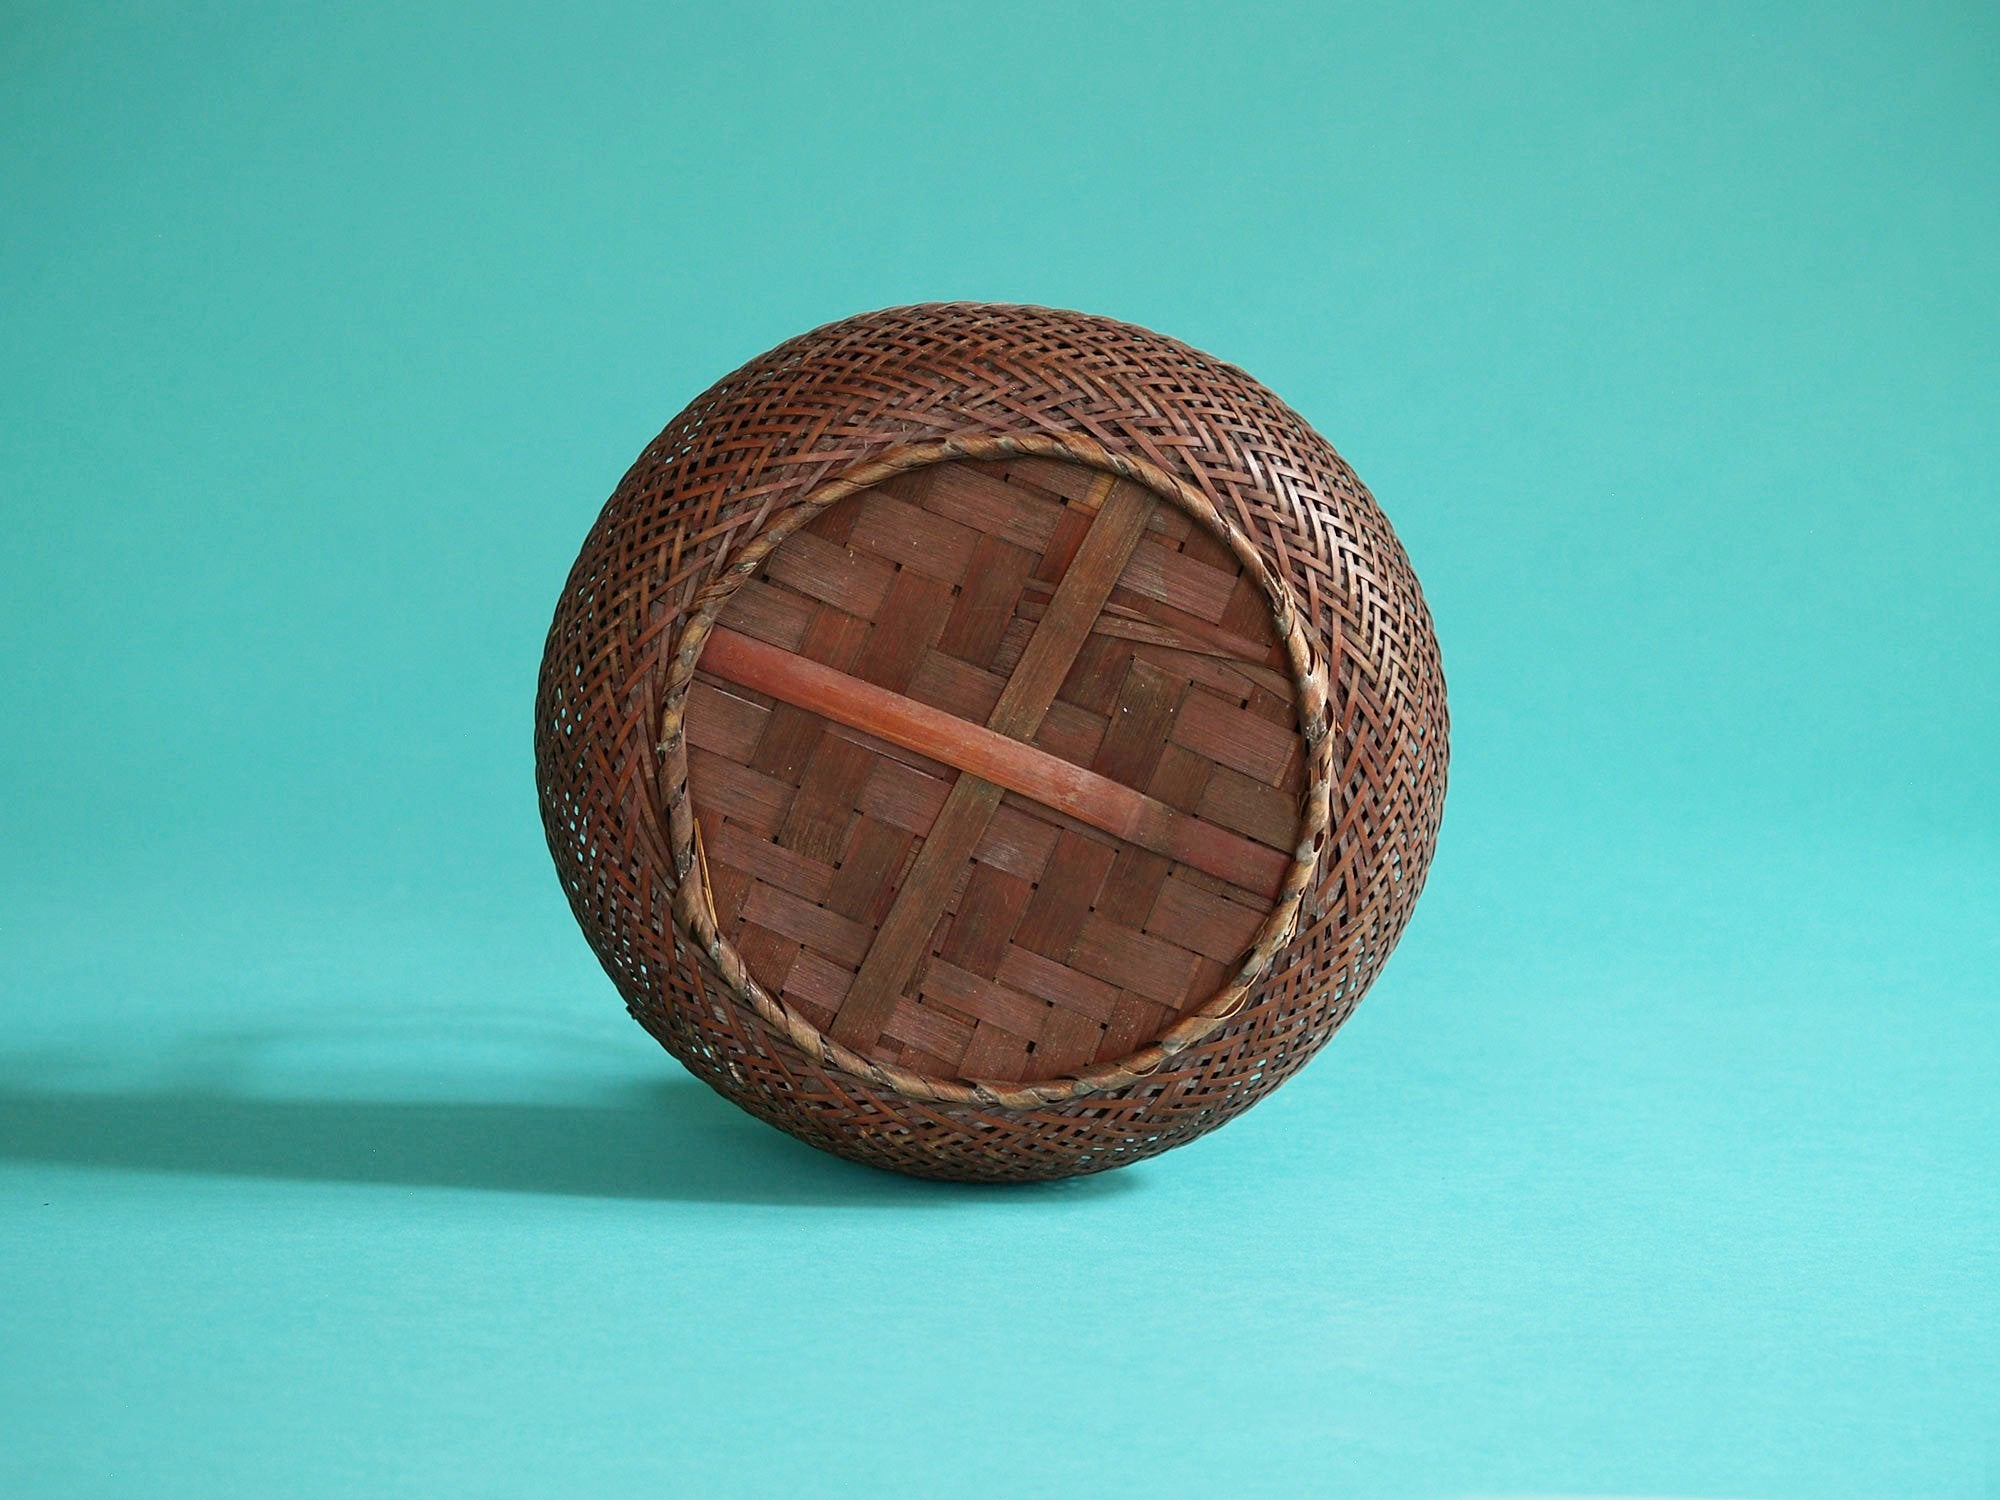 Sumitorikago, coupe / Panier en bambou pour la cérémonie du thé, Japon (Fin de l'ère Meiji / début ère Shōwa)..Sumitorikago bamboo charcoal basket for chanoyu, Japan (Late Meiji era / early Shōwa era)